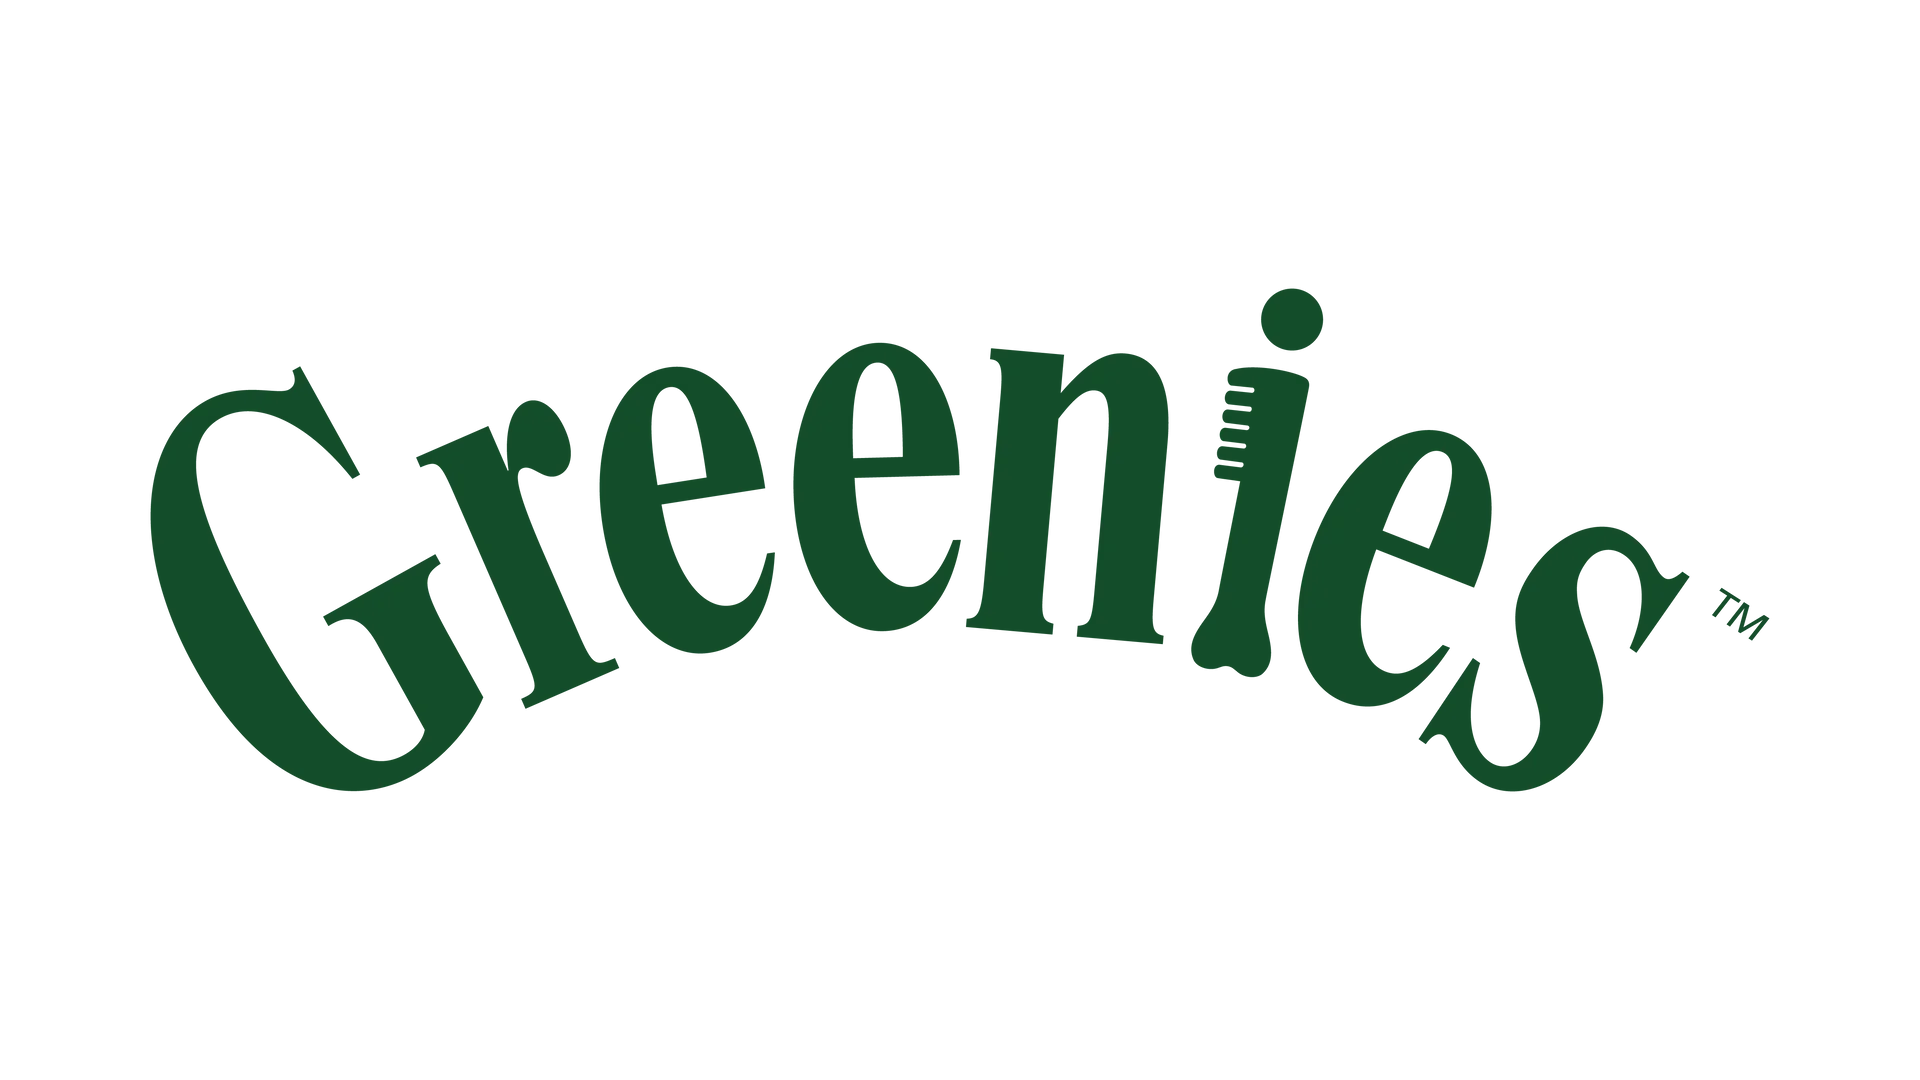 Greenies Logo